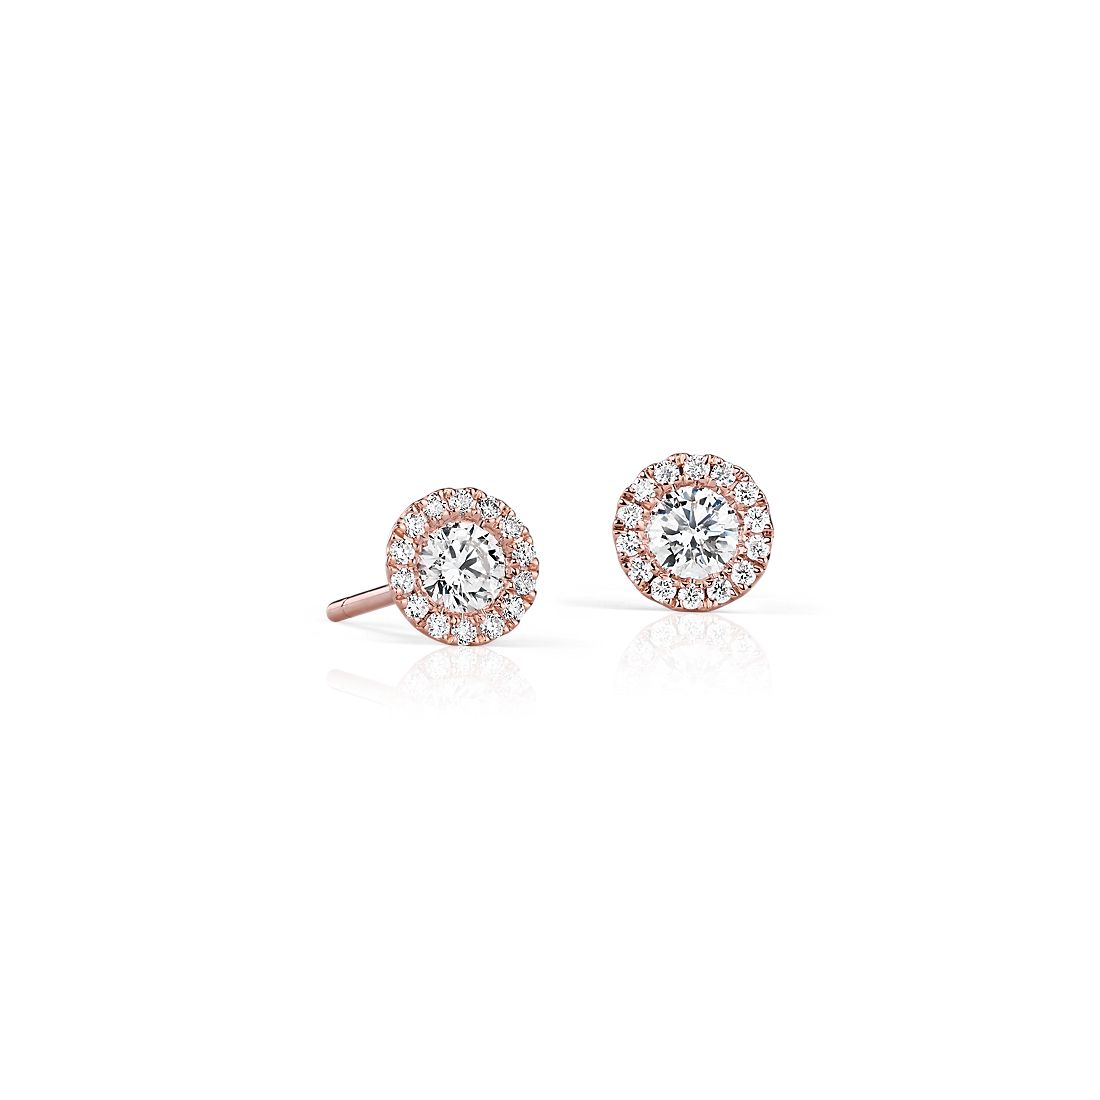 Martini Halo Diamond Stud Earrings in 14k Rose Gold (1/2 ct. tw.)